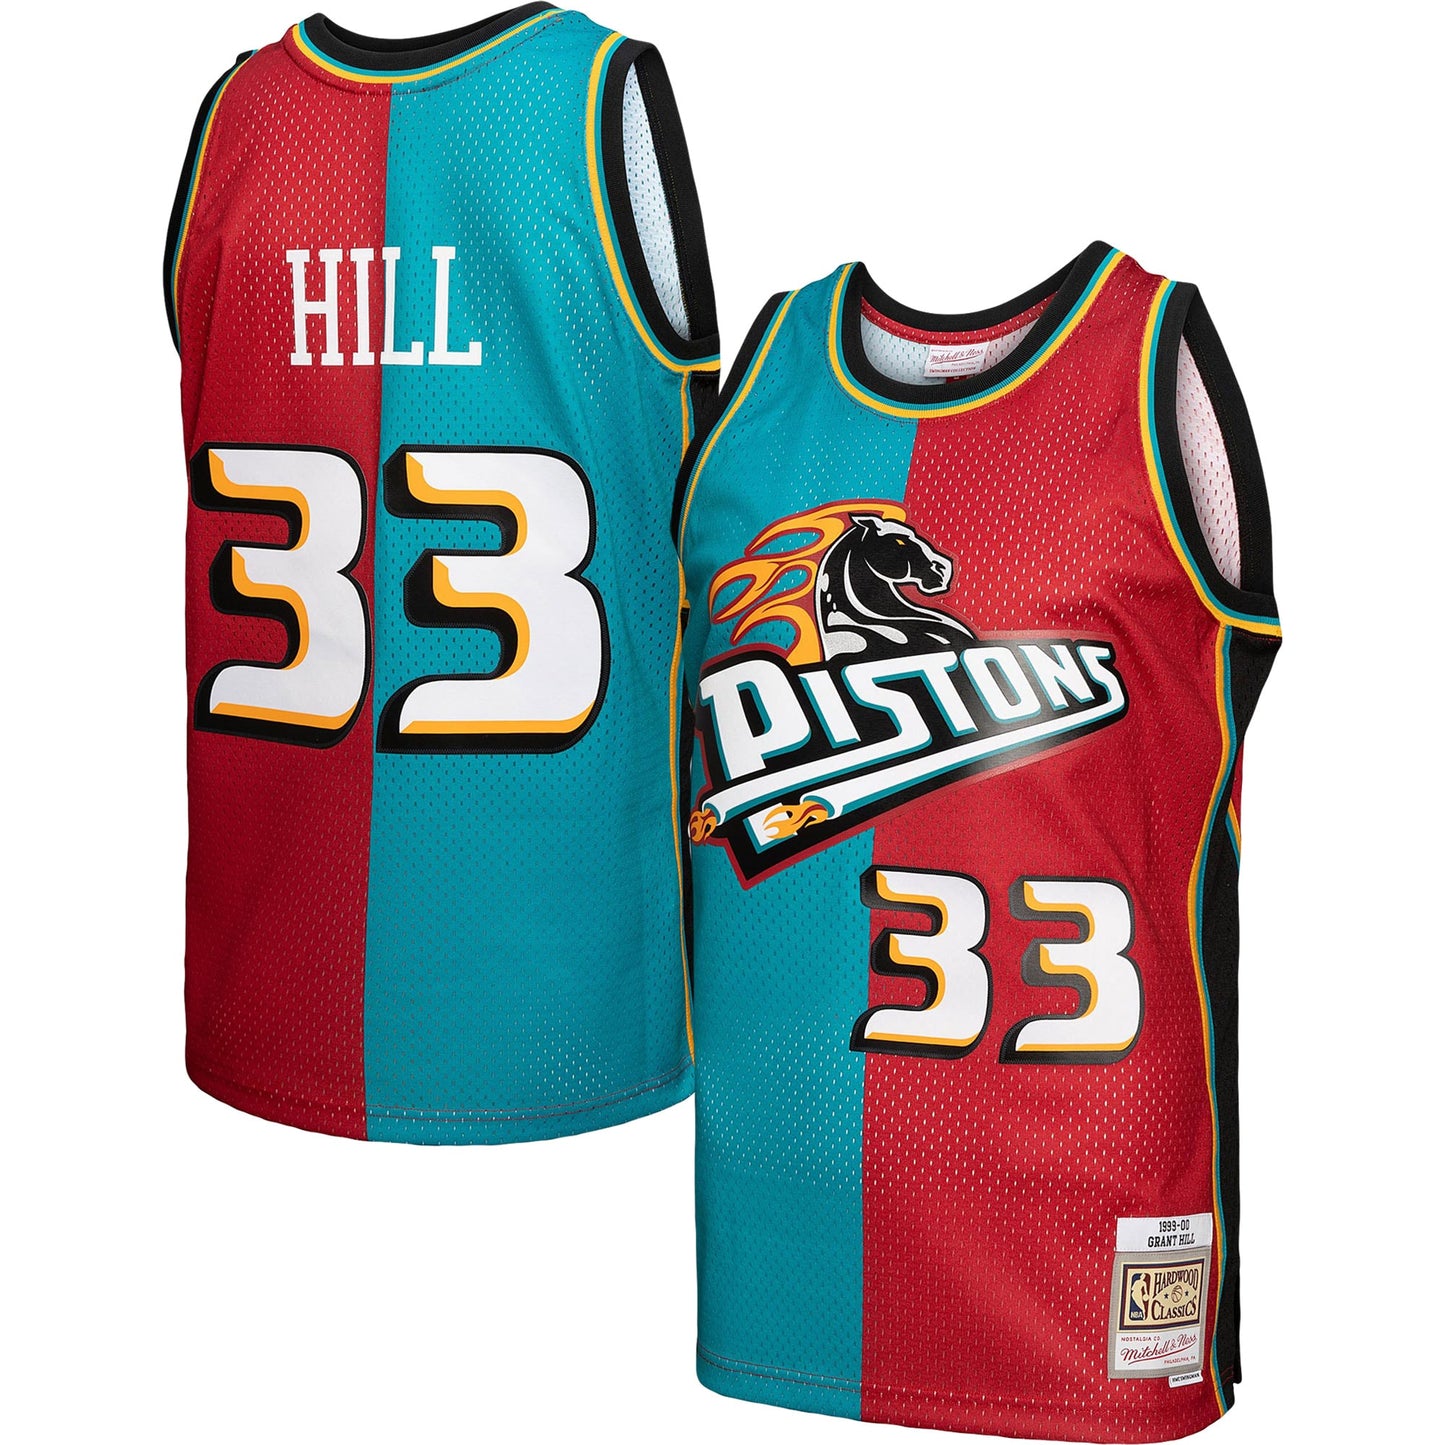 Grant Hill Detroit Pistons Mitchell & Ness Hardwood Classics 1999/00 Split Swingman Jersey - Teal/Red